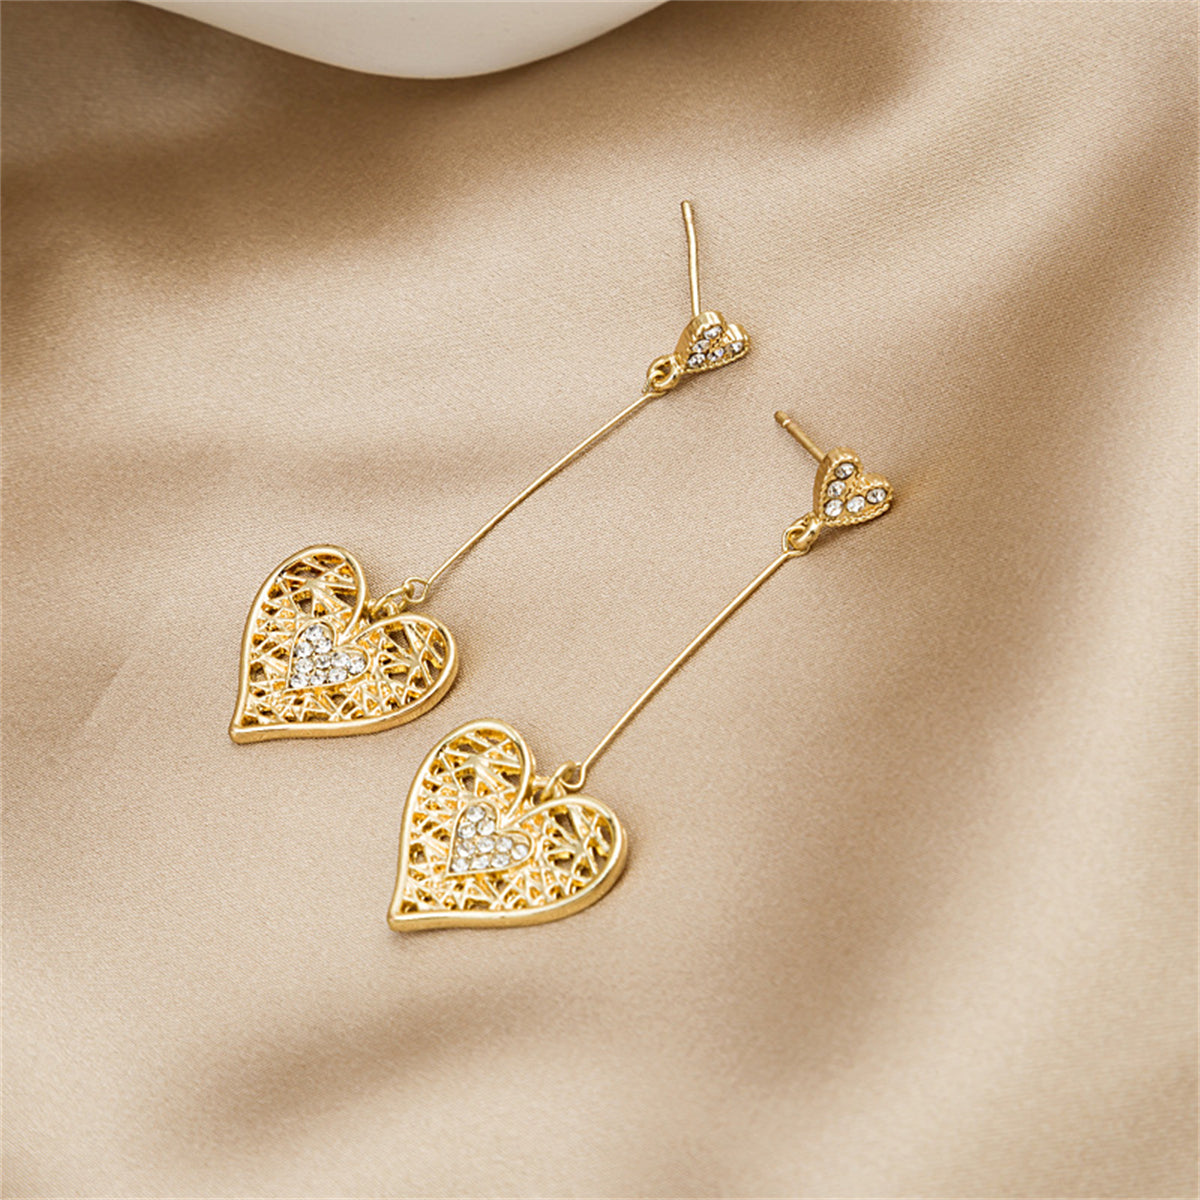 Cubic Zirconia & 18K Gold-Plated Openwork Heart Drop Earrings